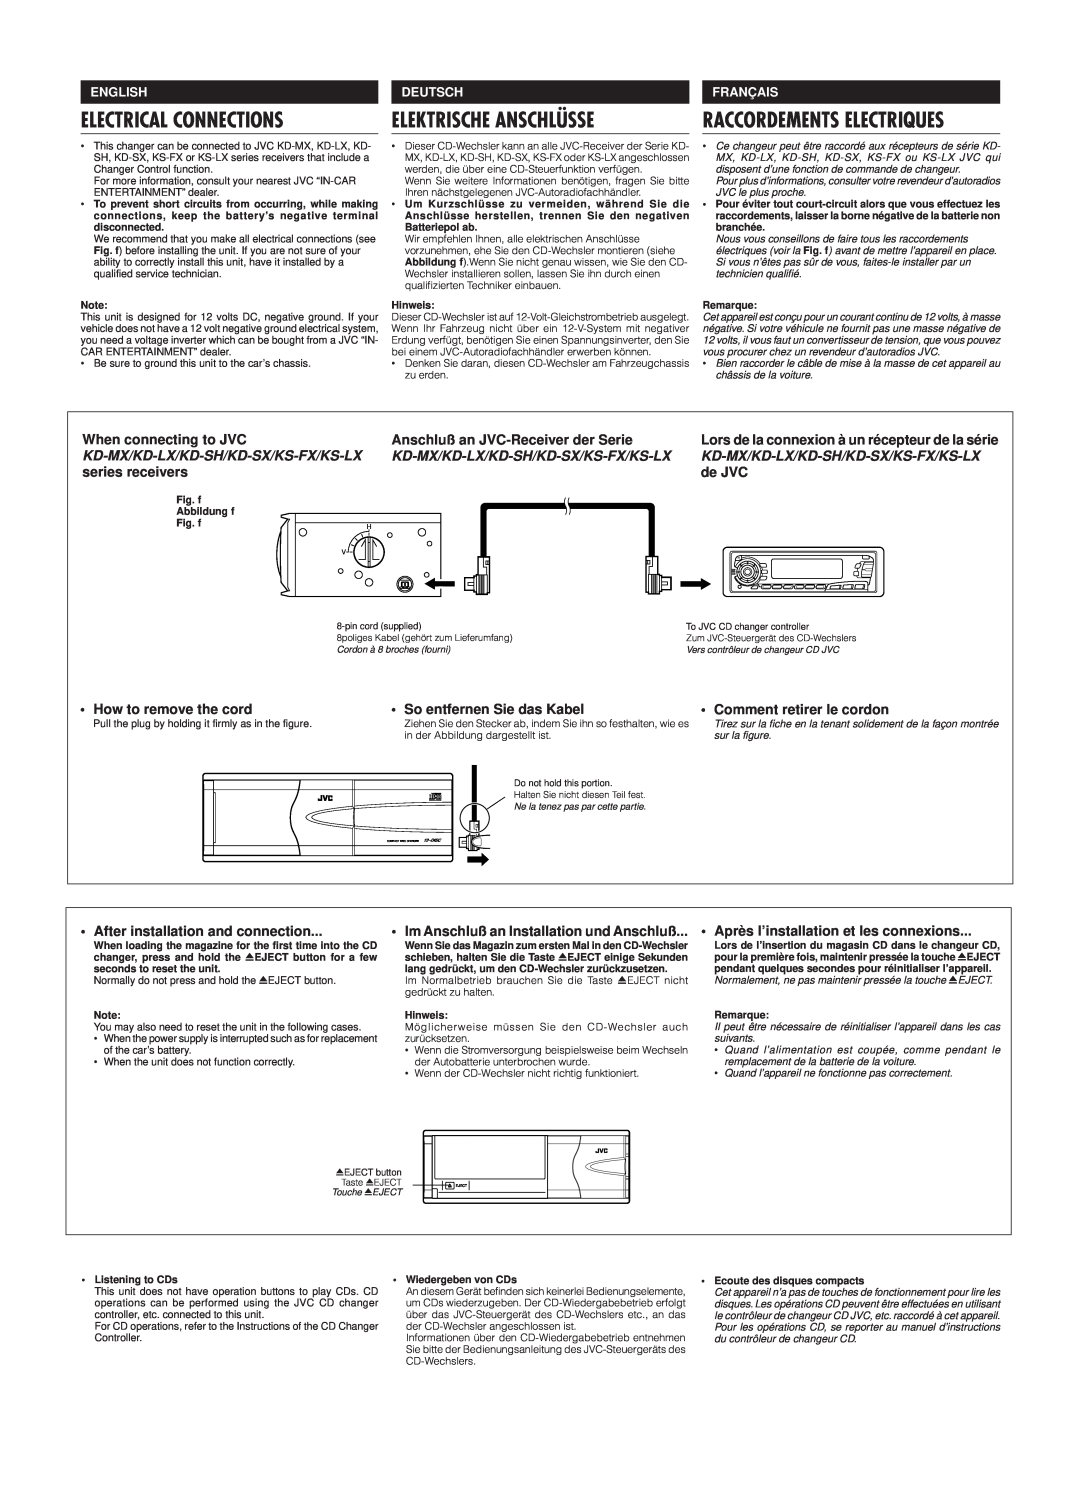 JVC CH-X400 Electrical Connections, Elektrische Anschlüsse, • How to remove the cord, • So entfernen Sie das Kabel 